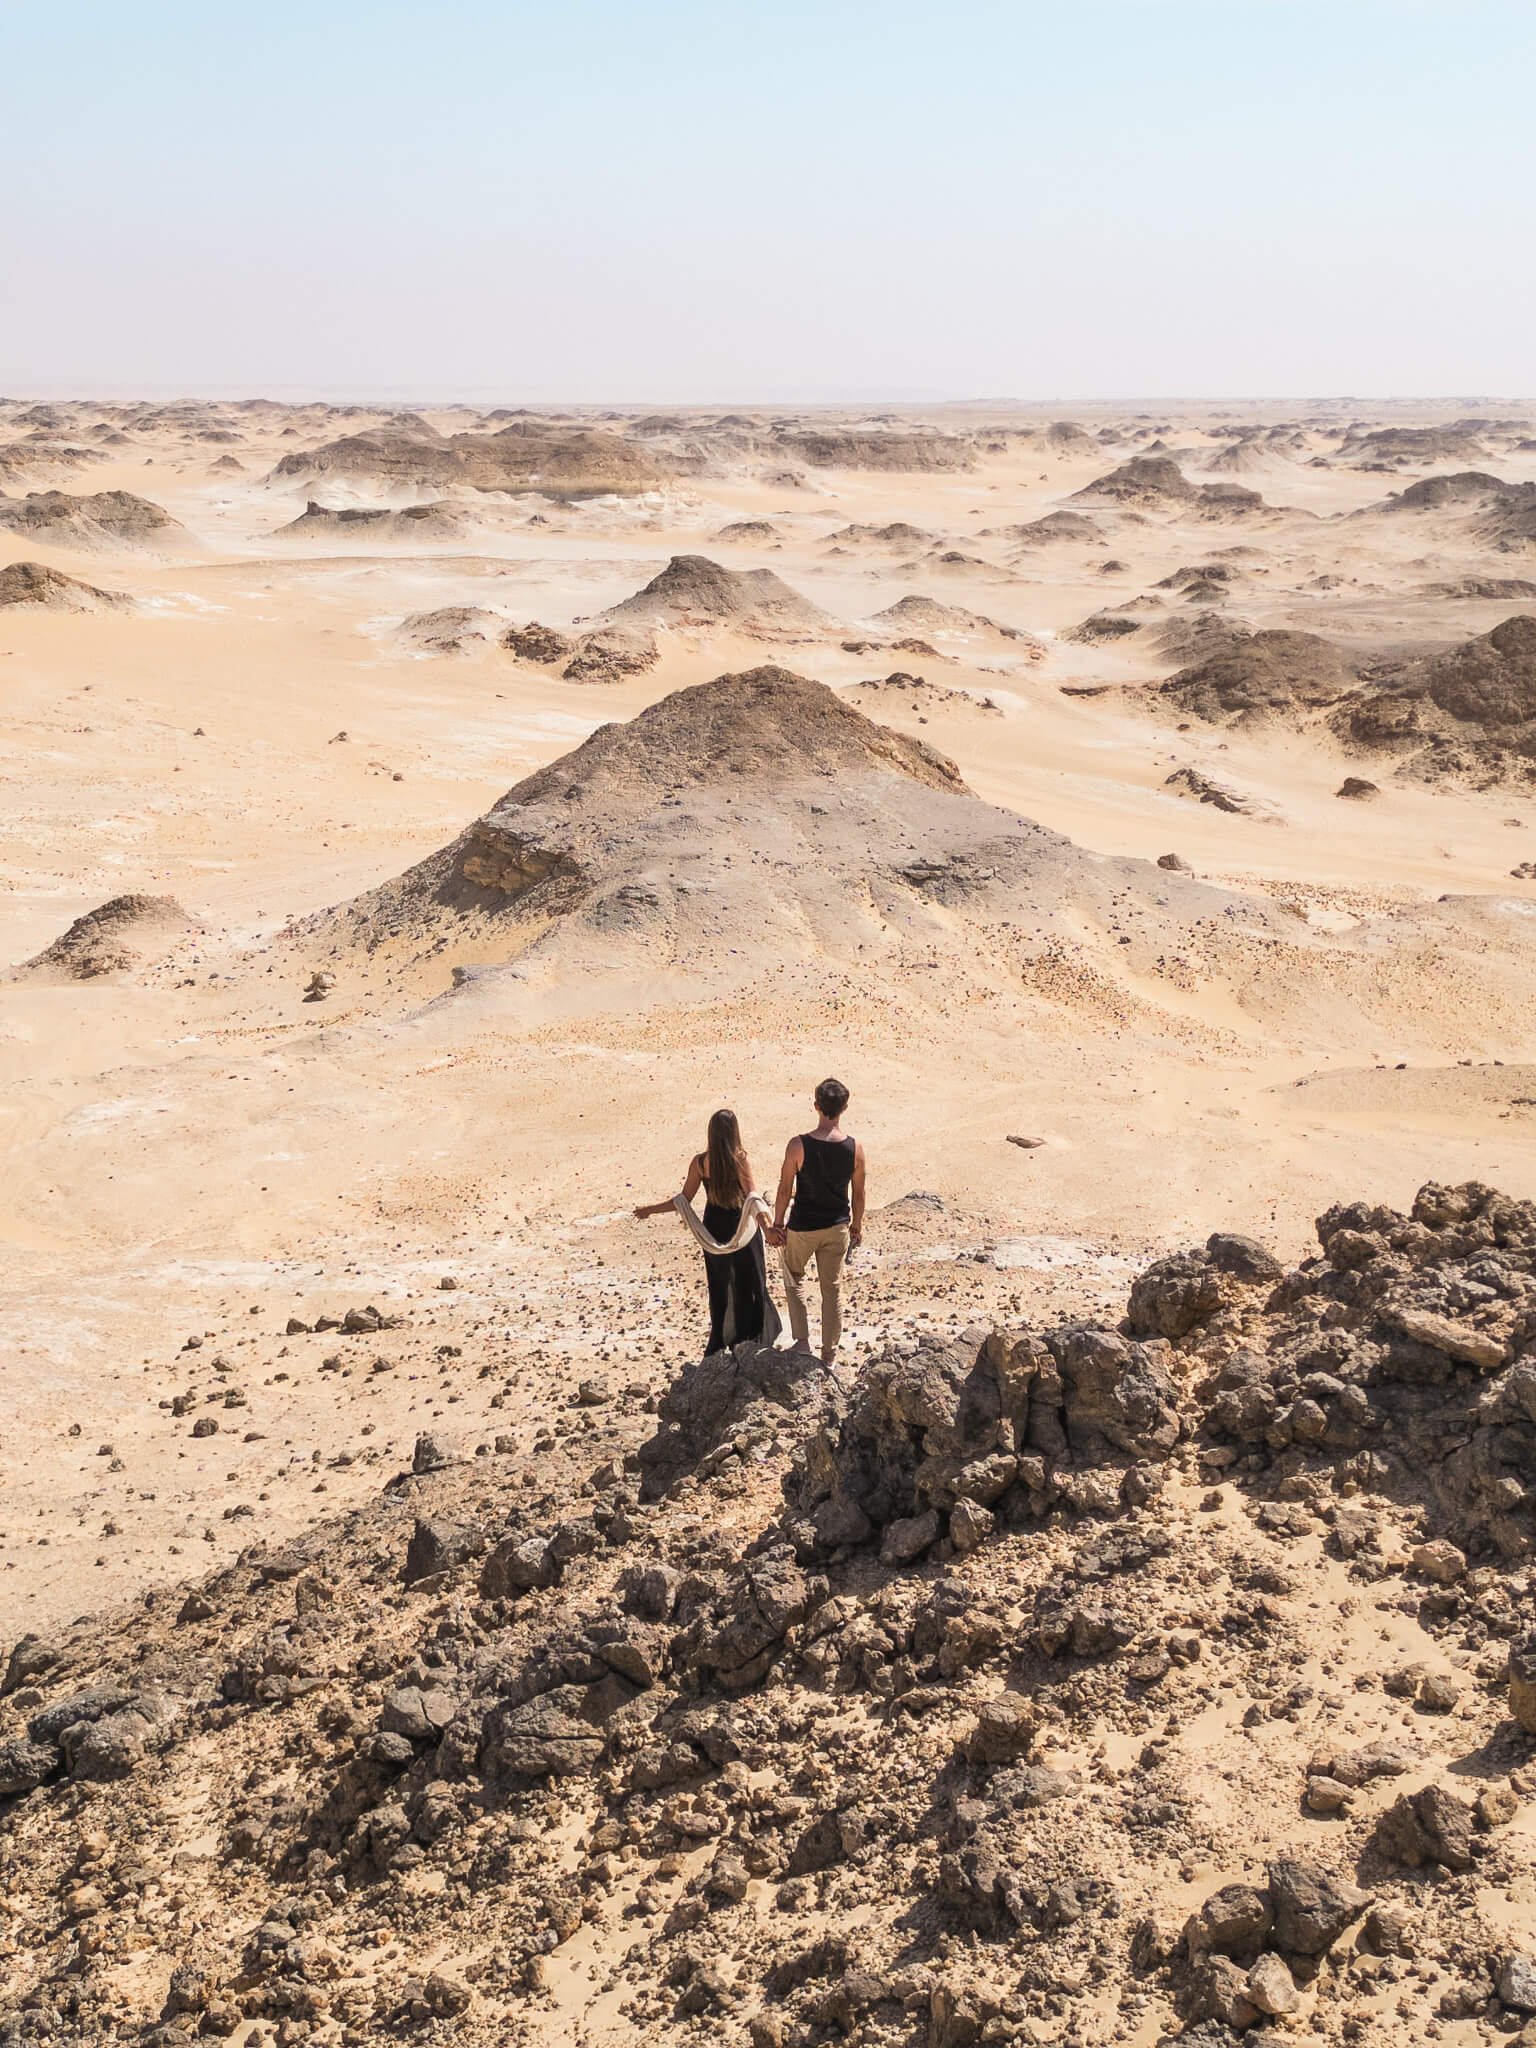 Crystal Mountain at the White Desert in Egypt